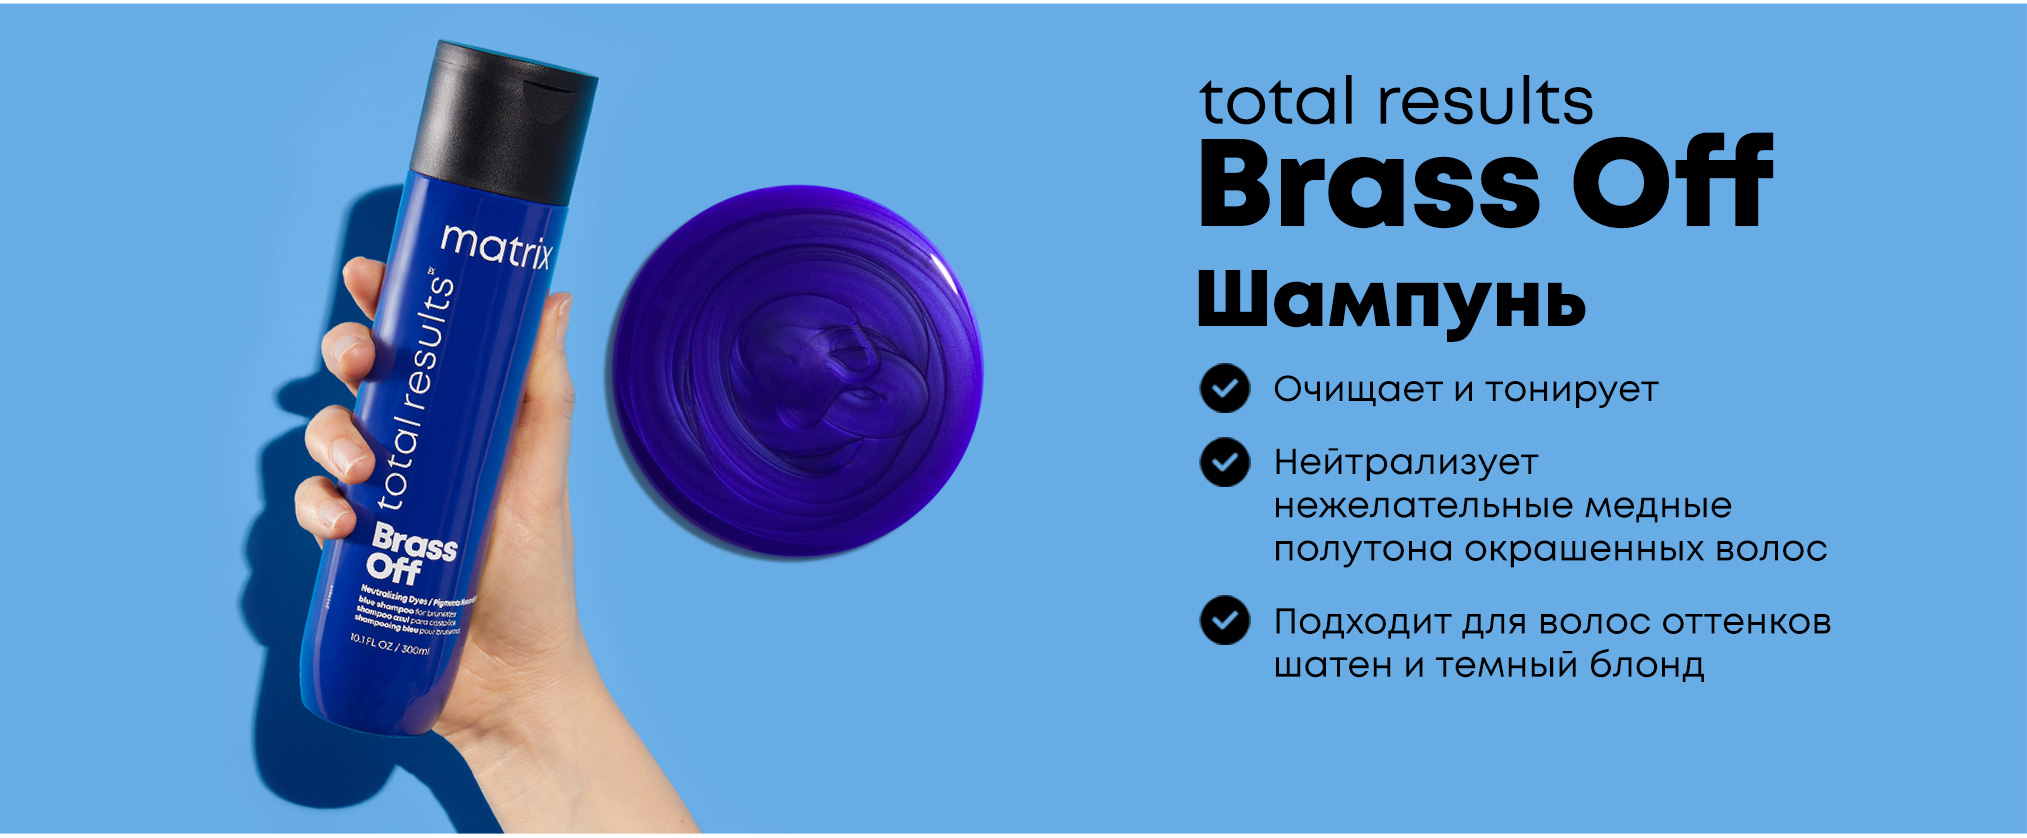 4. Matrix Total Results Brass Off Shampoo - wide 7